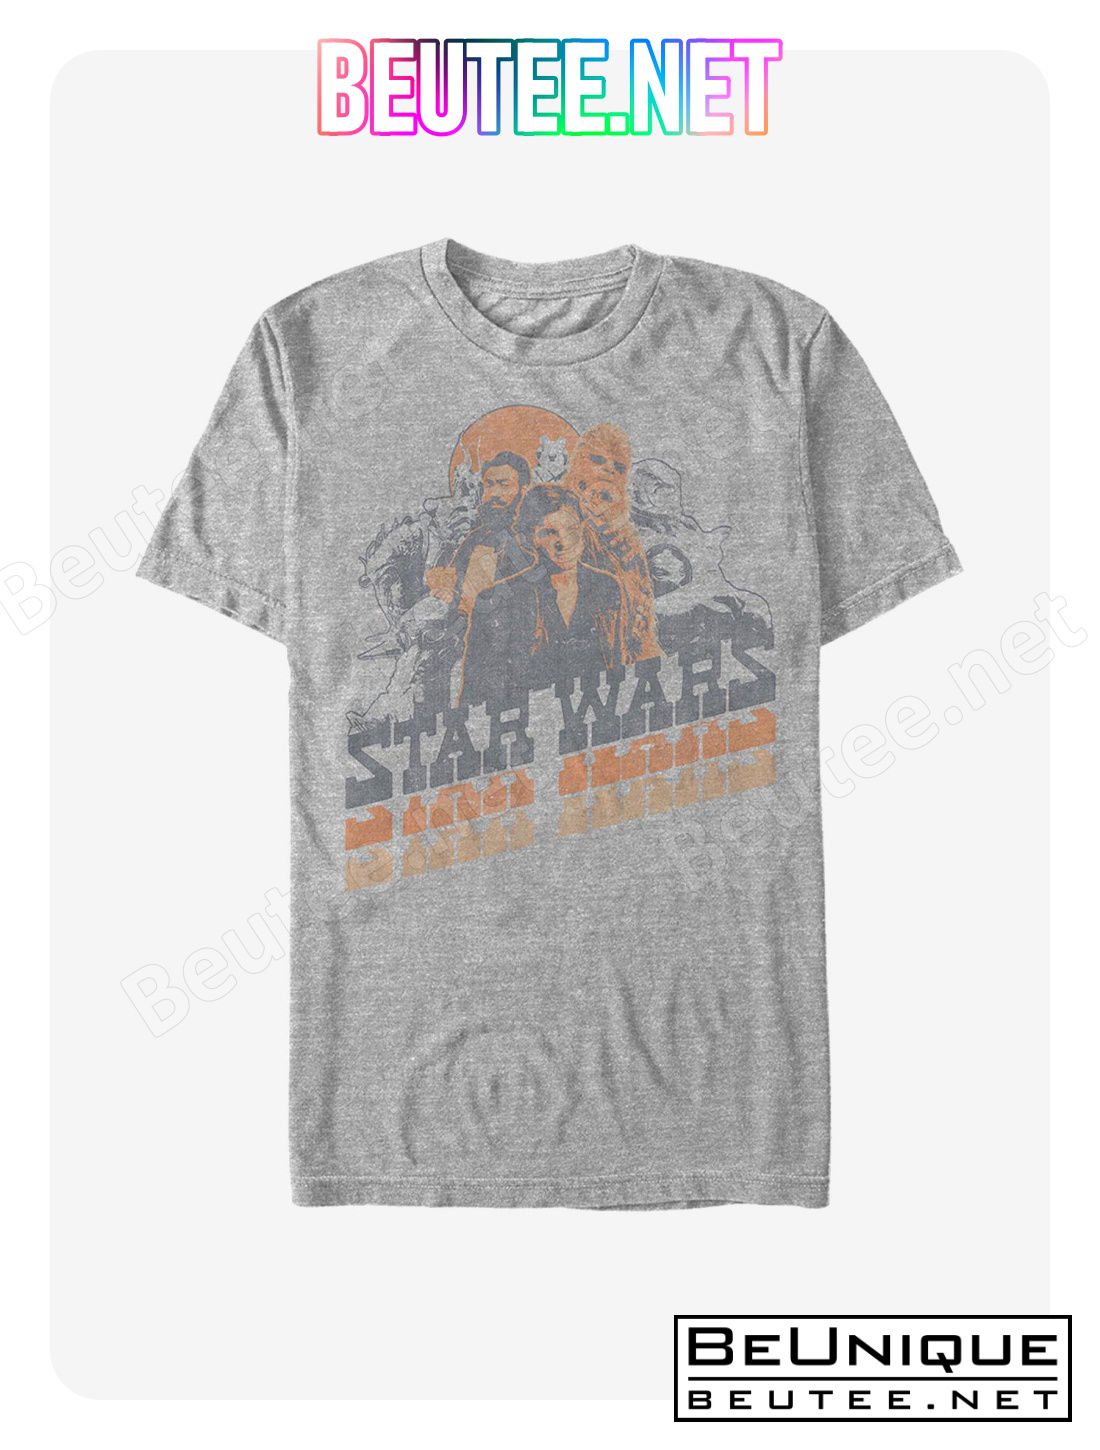 Star Wars Retro Characters T-Shirt